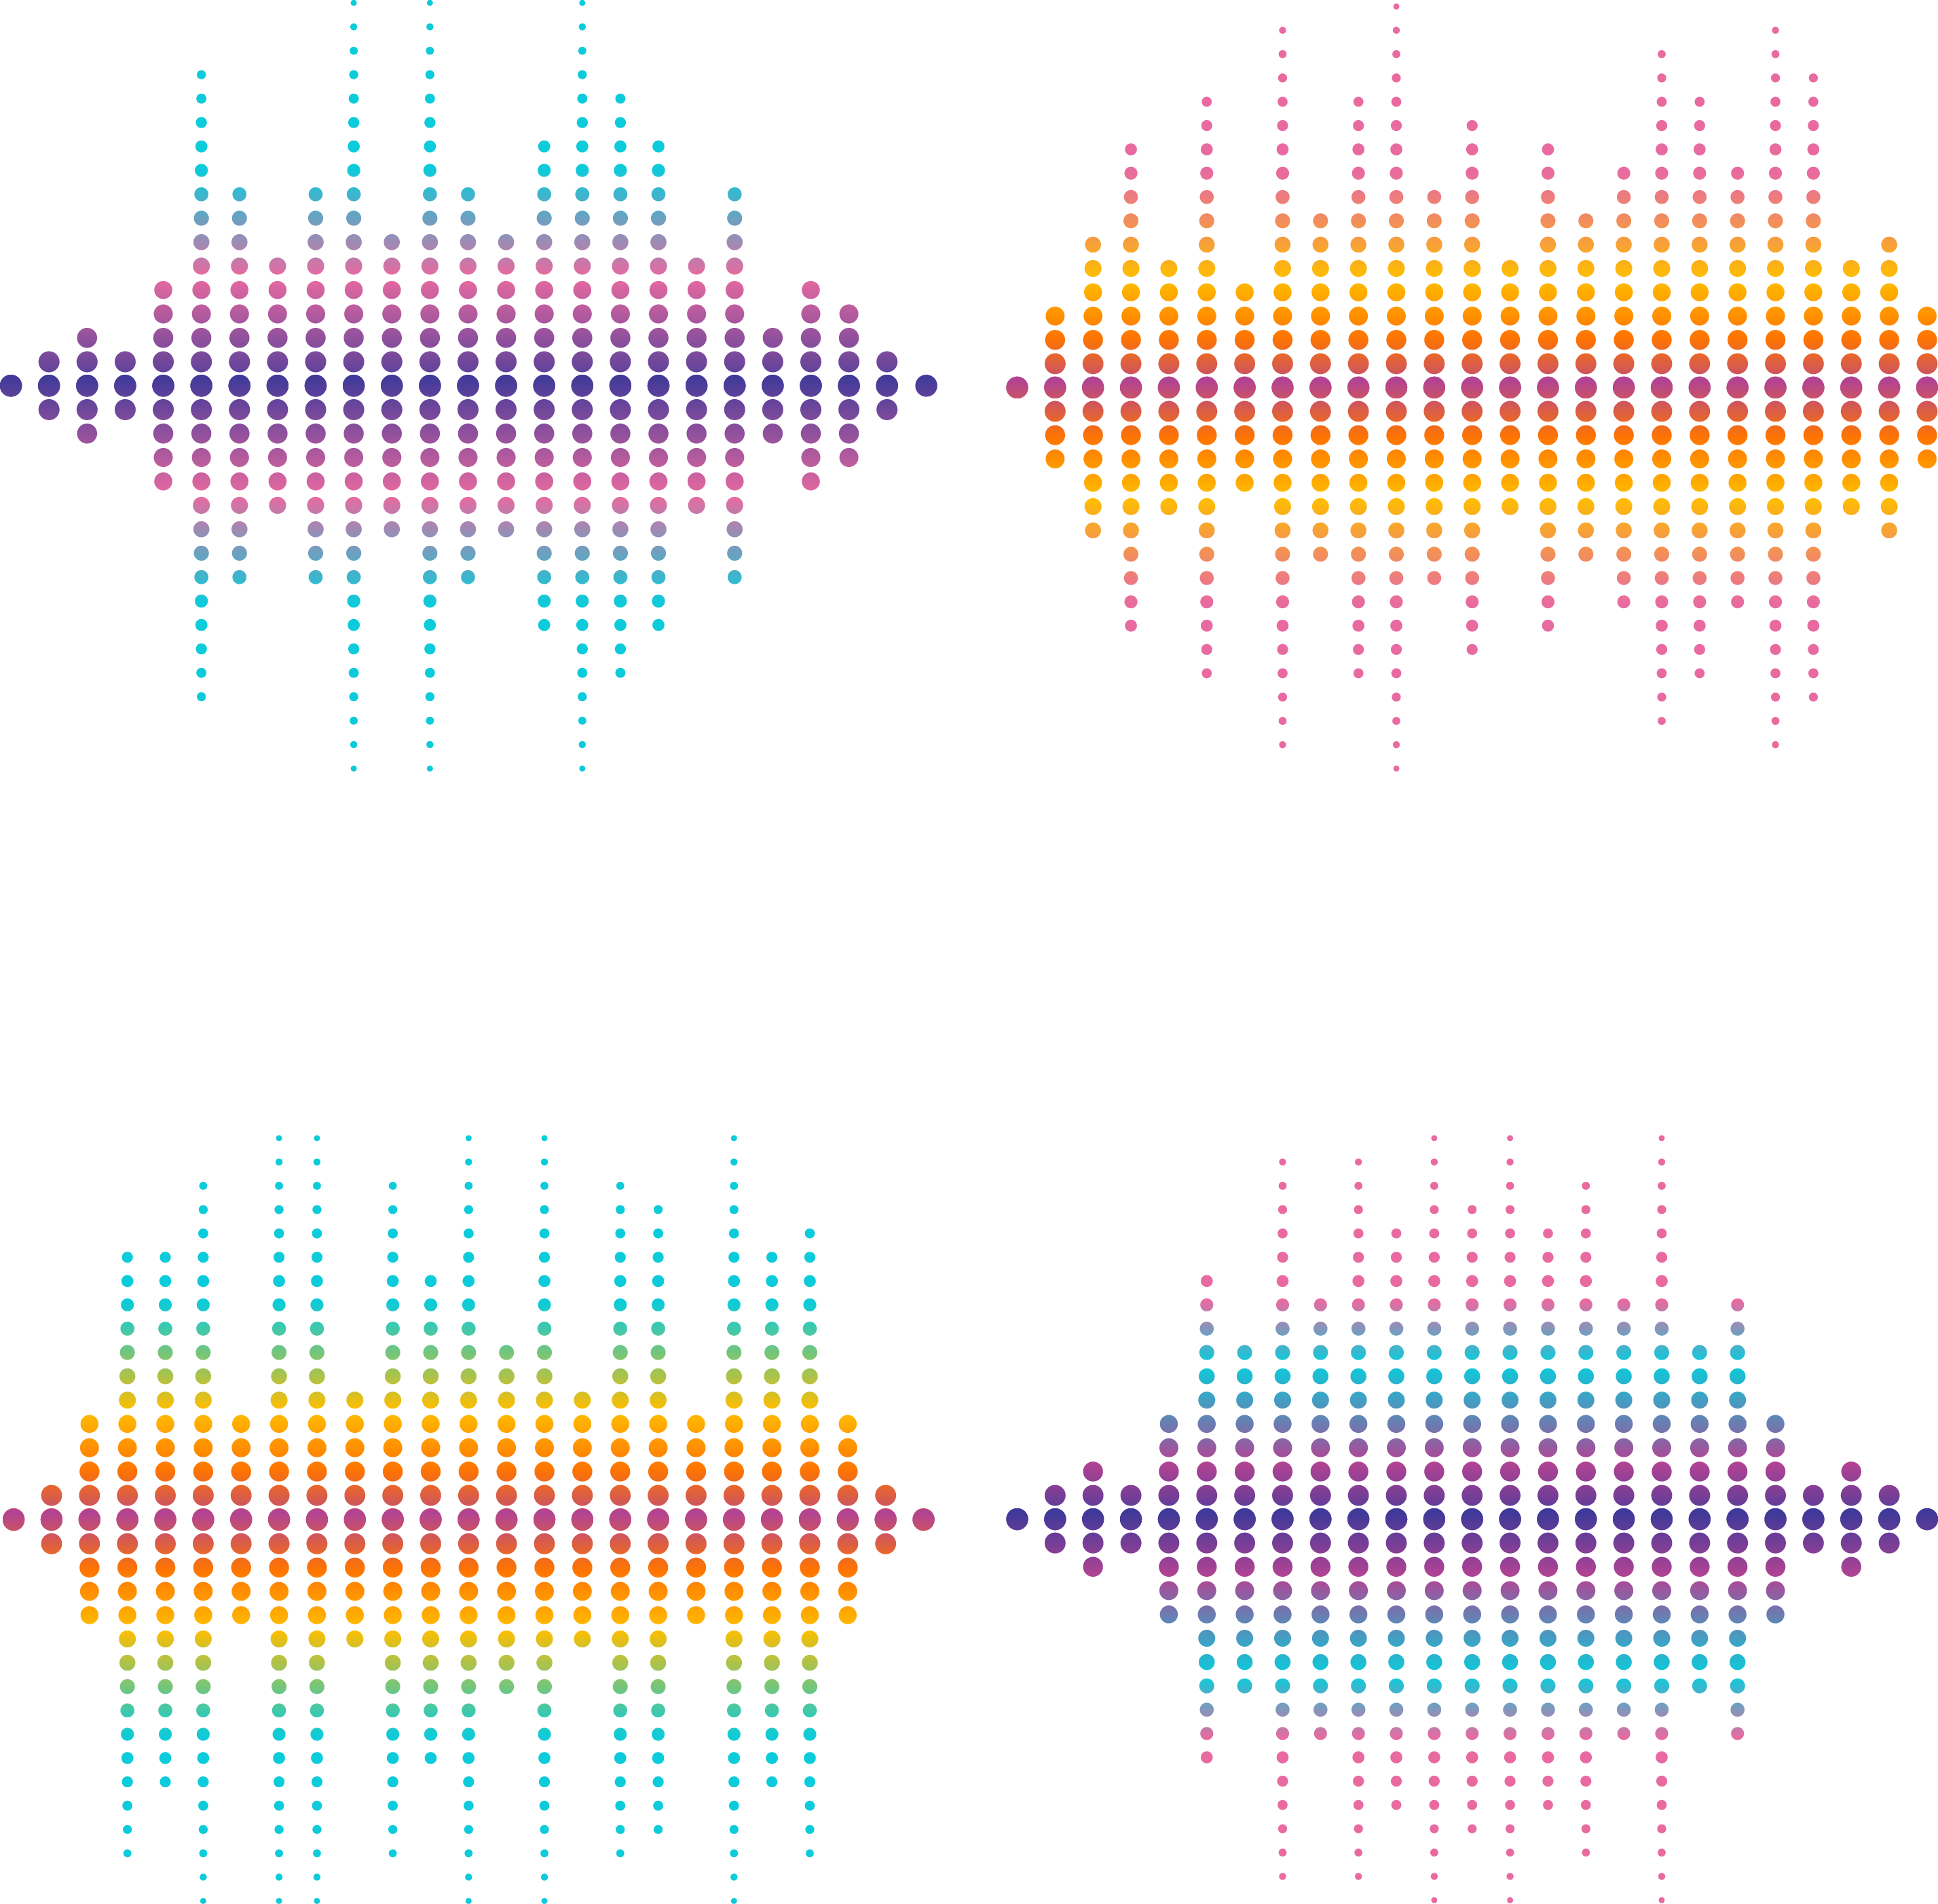 Sound Graphic Pixelation Diagram Square Design PNG Image